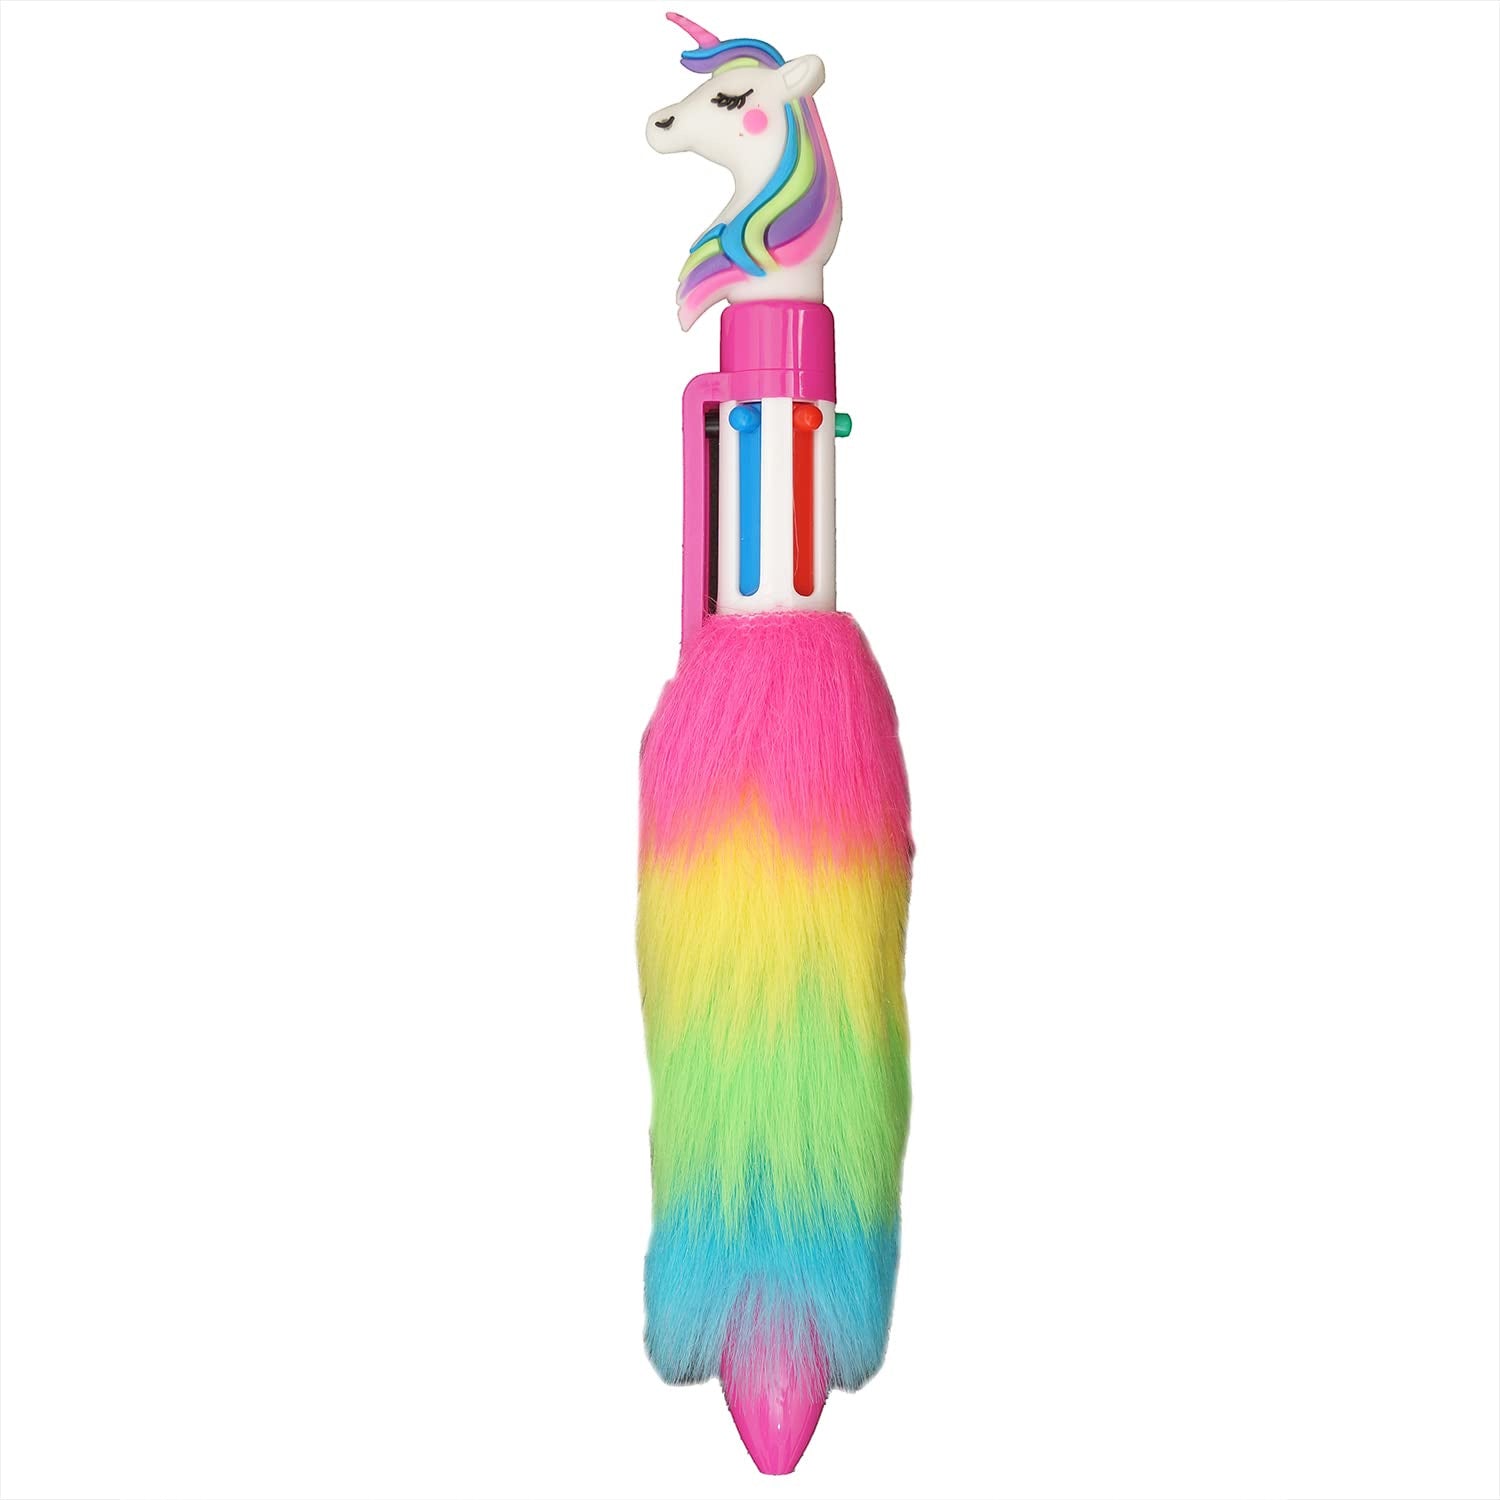 Pen Unicorn Fiur Design | Ballpoint Pen Feather Design | Push Button Multicolor Pen - for Students, Kids, Girls, Boys, School, Drawing, Birthday Gift & Return Gifts - Apkamart 